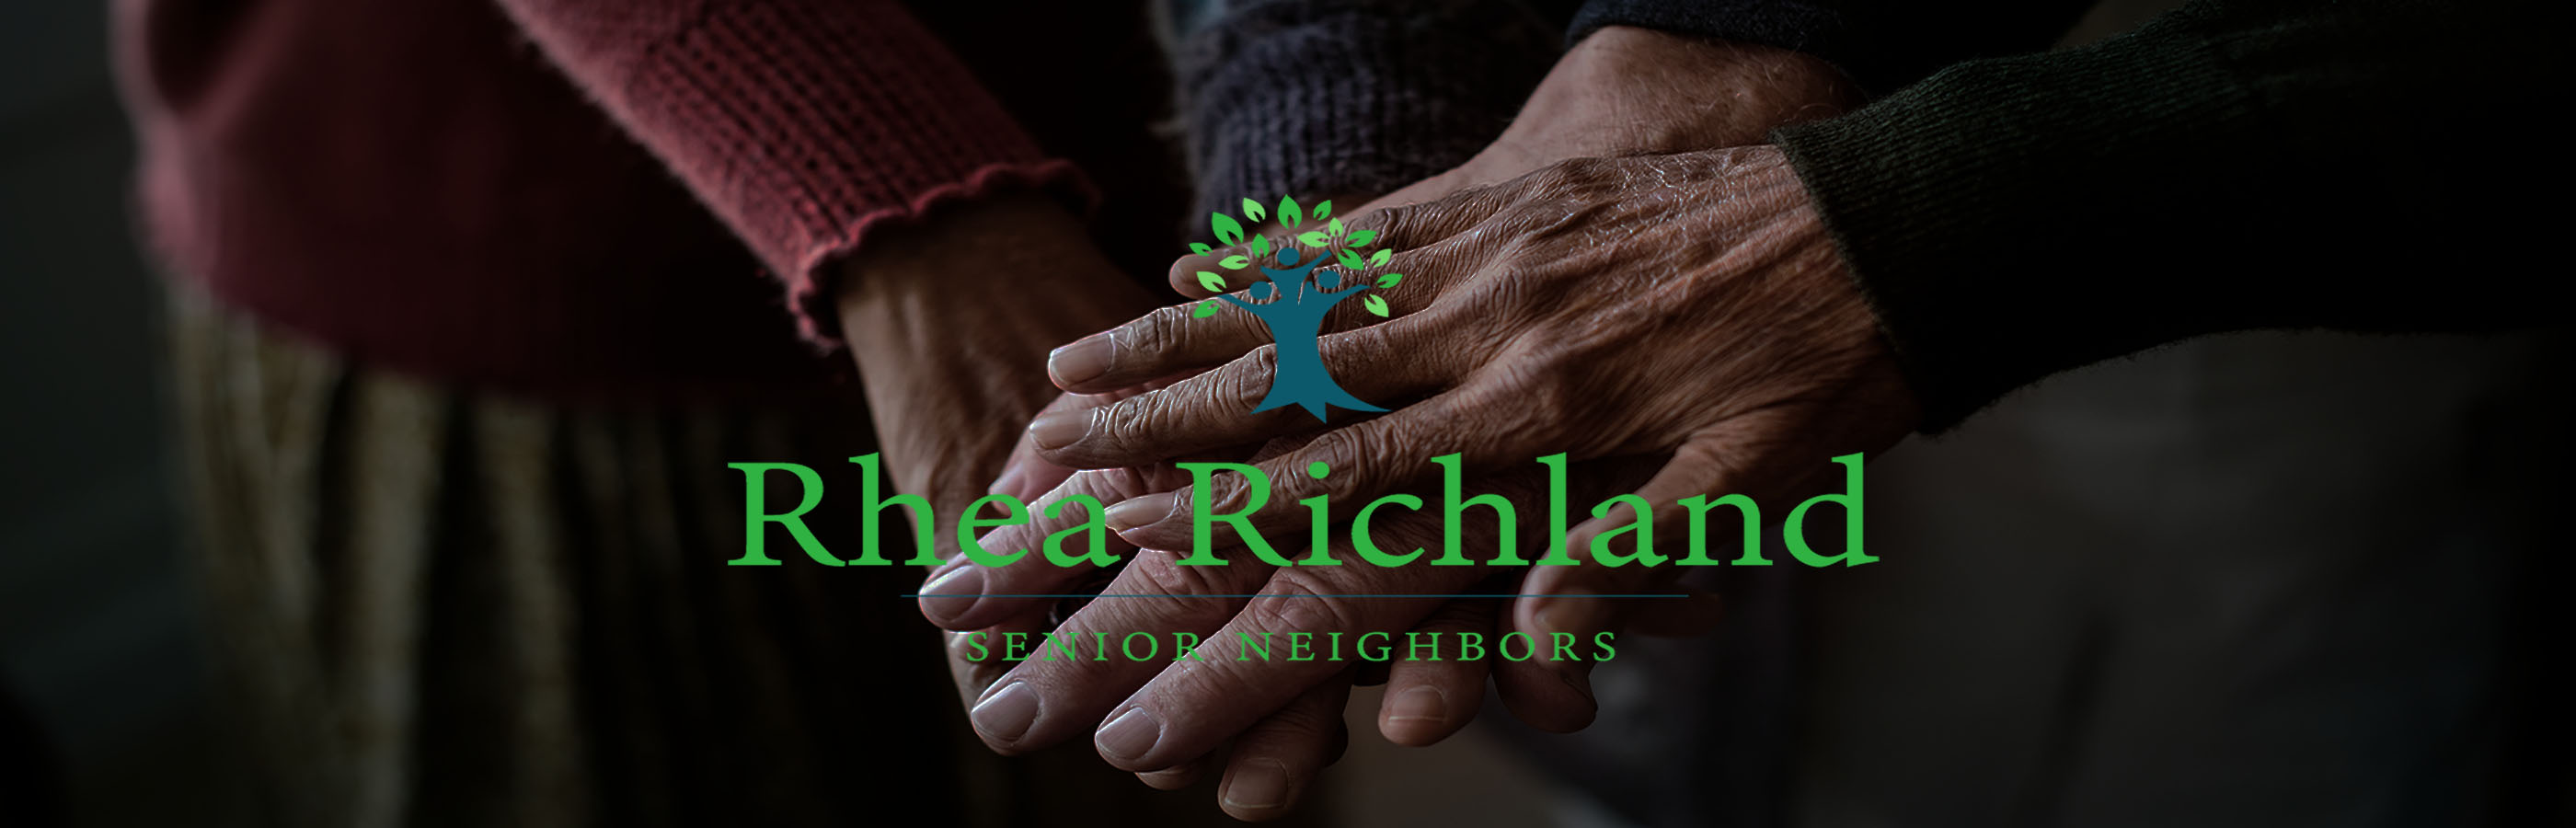 Rhea Richland Senior Neighbors